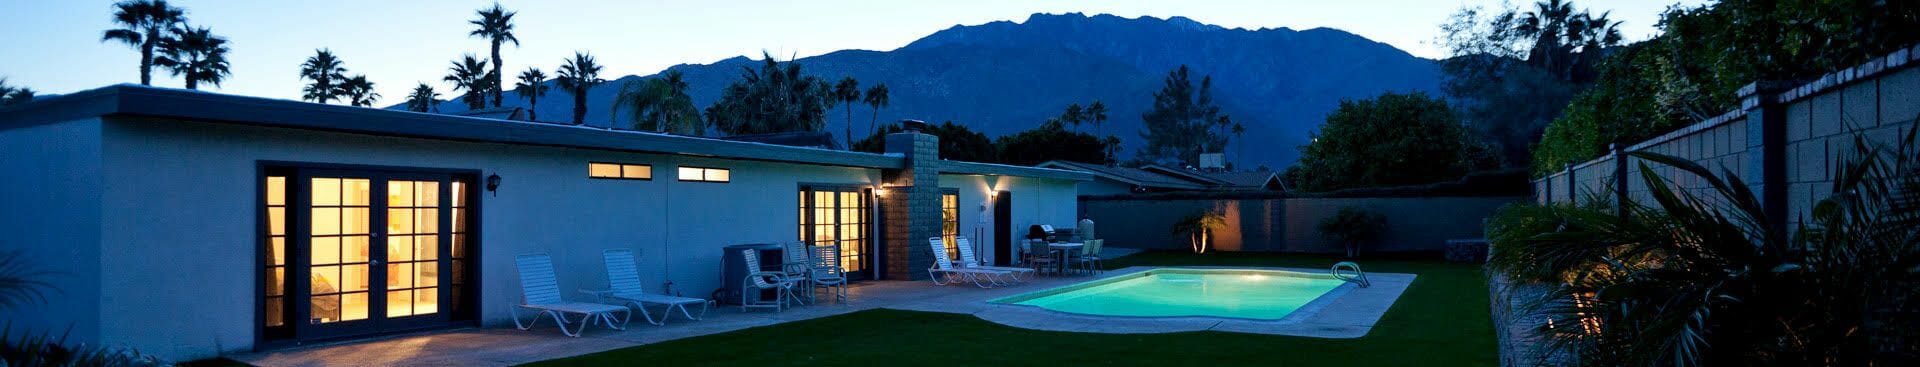 Pool home in Palm Springs, California